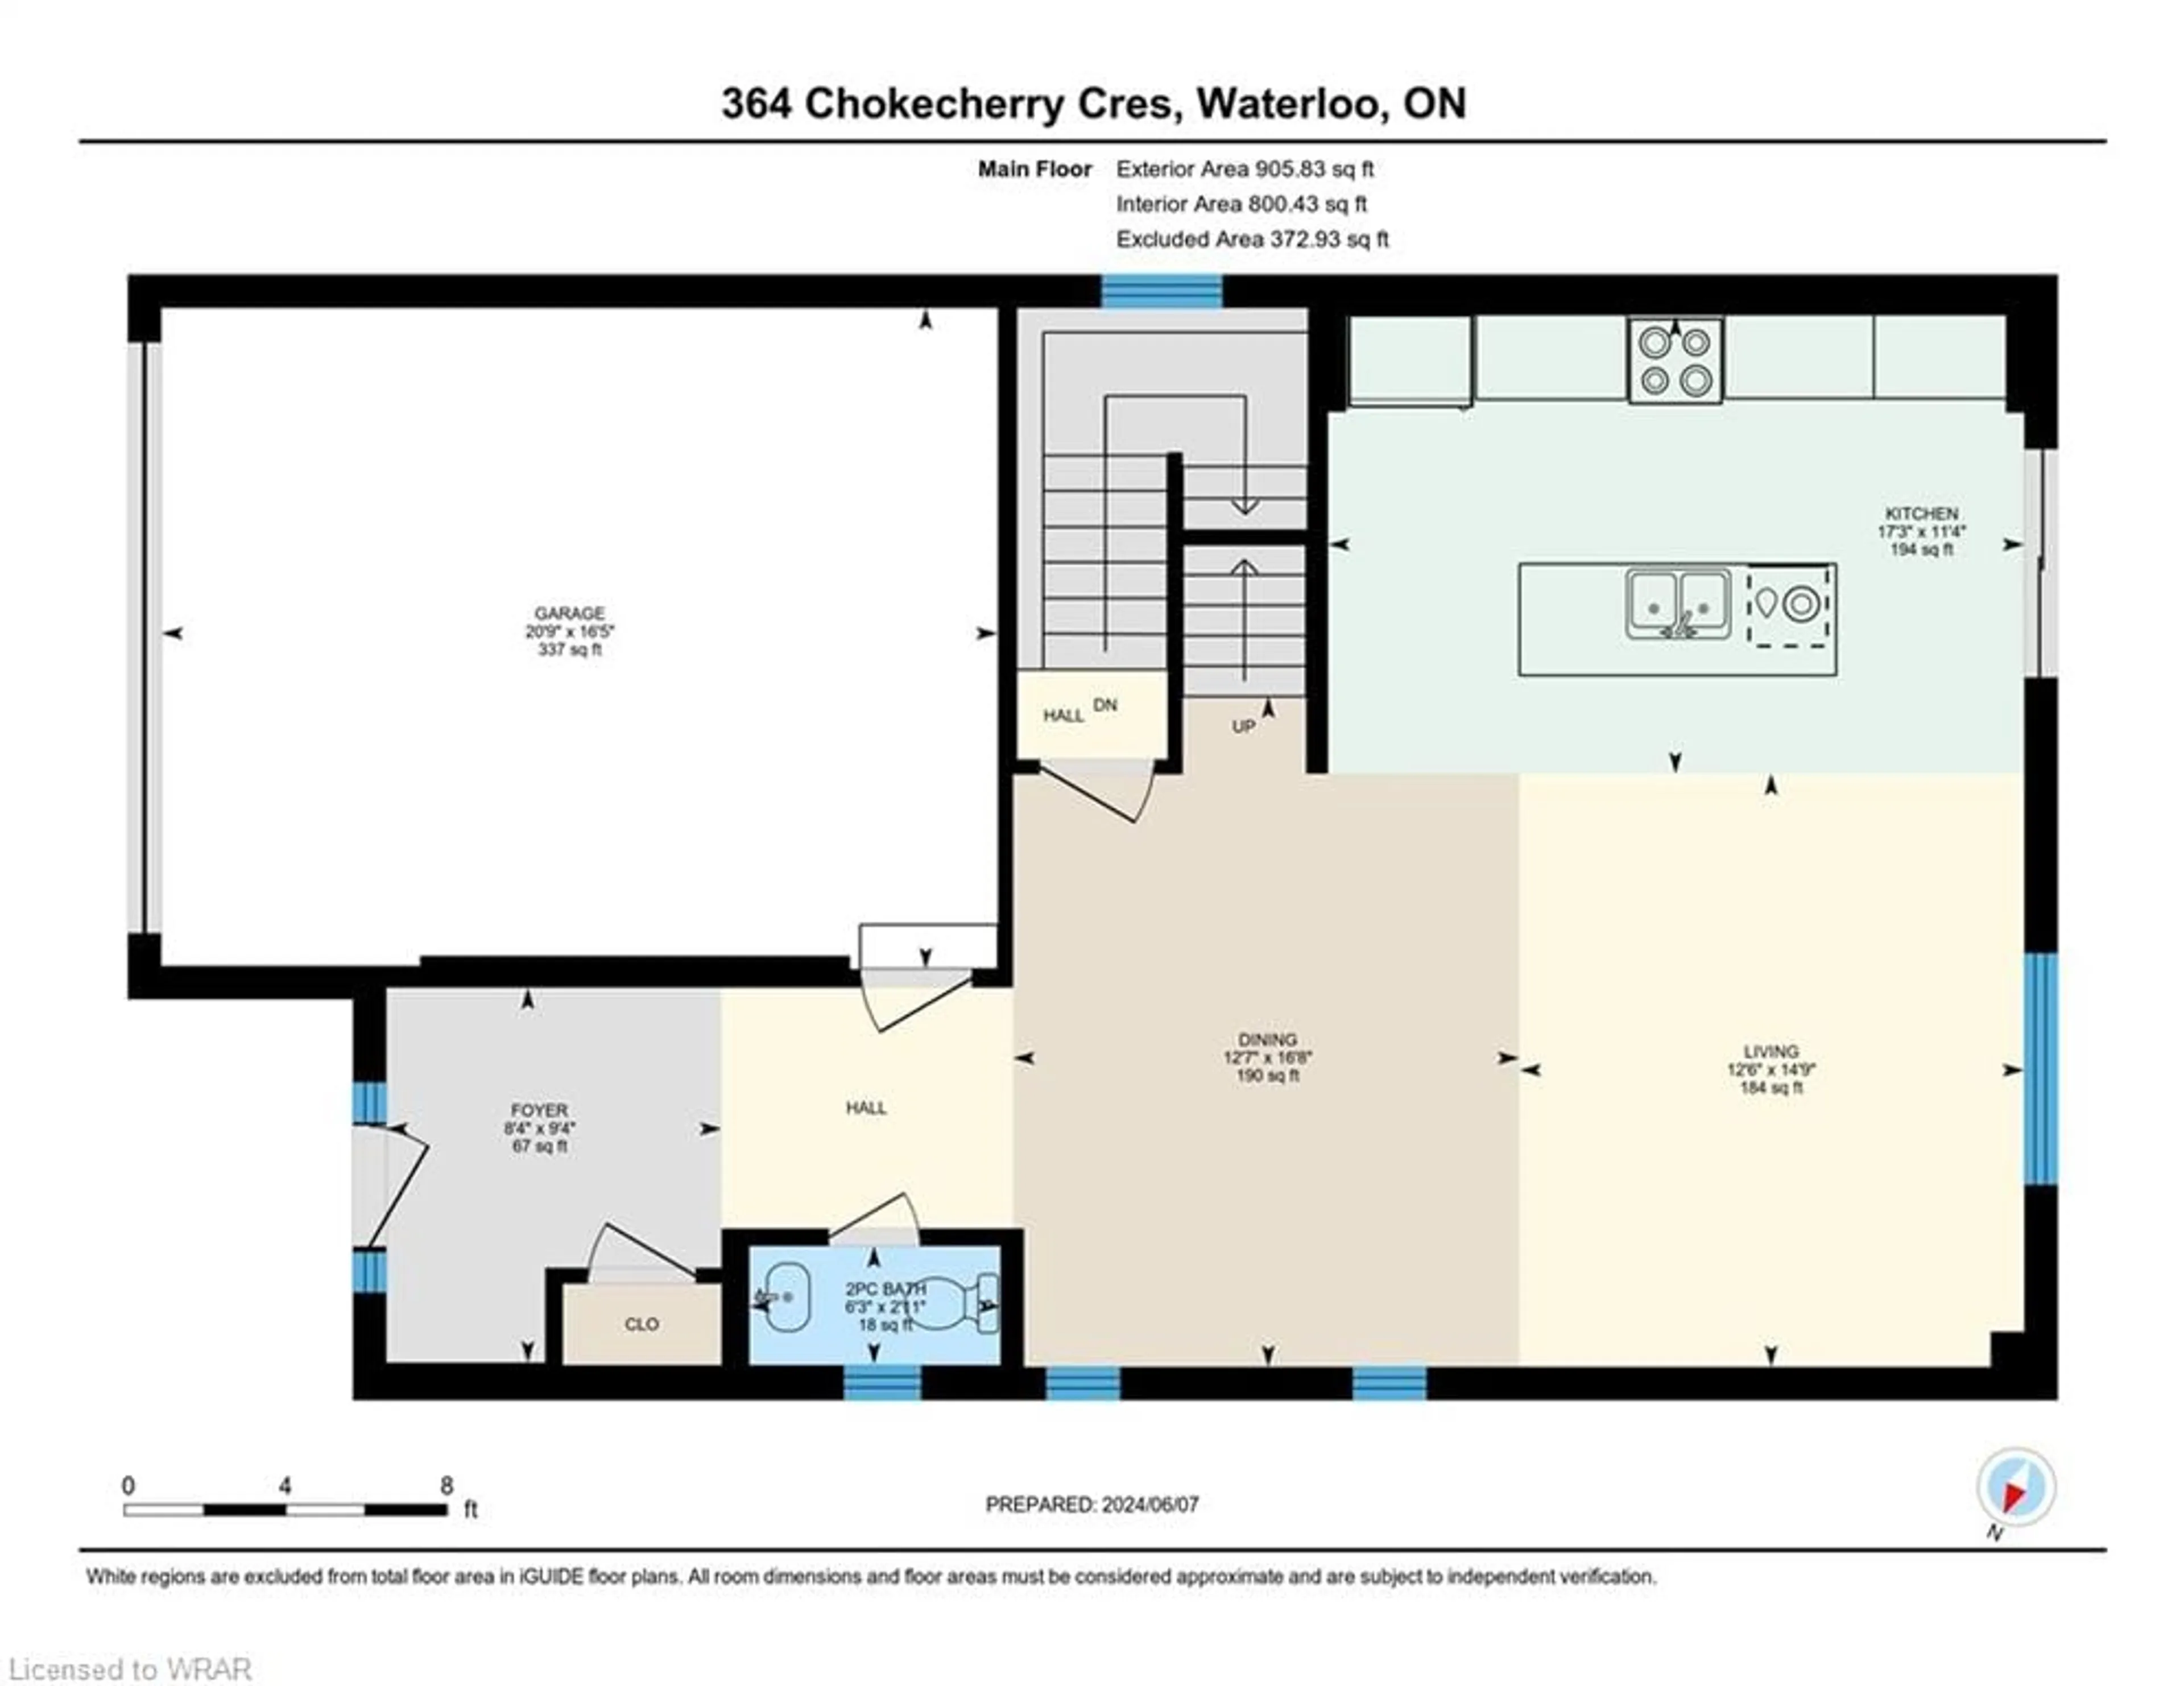 Floor plan for 364 Chokecherry Cres, Waterloo Ontario N2V 0H1